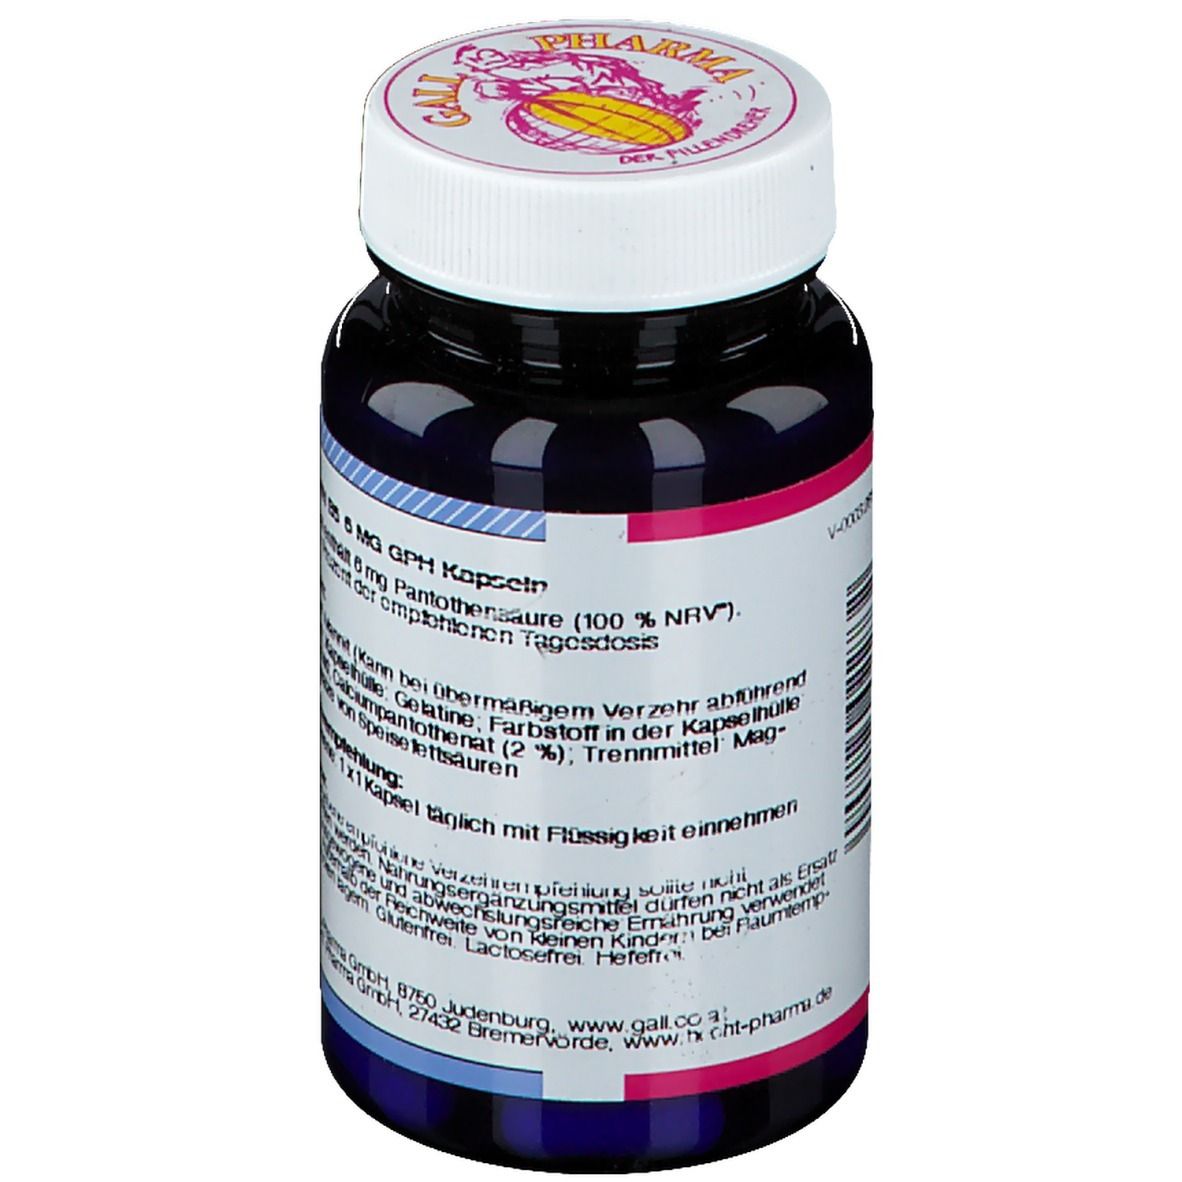 GALL PHARMA Vitamin B5 6 mg GPH Kapseln